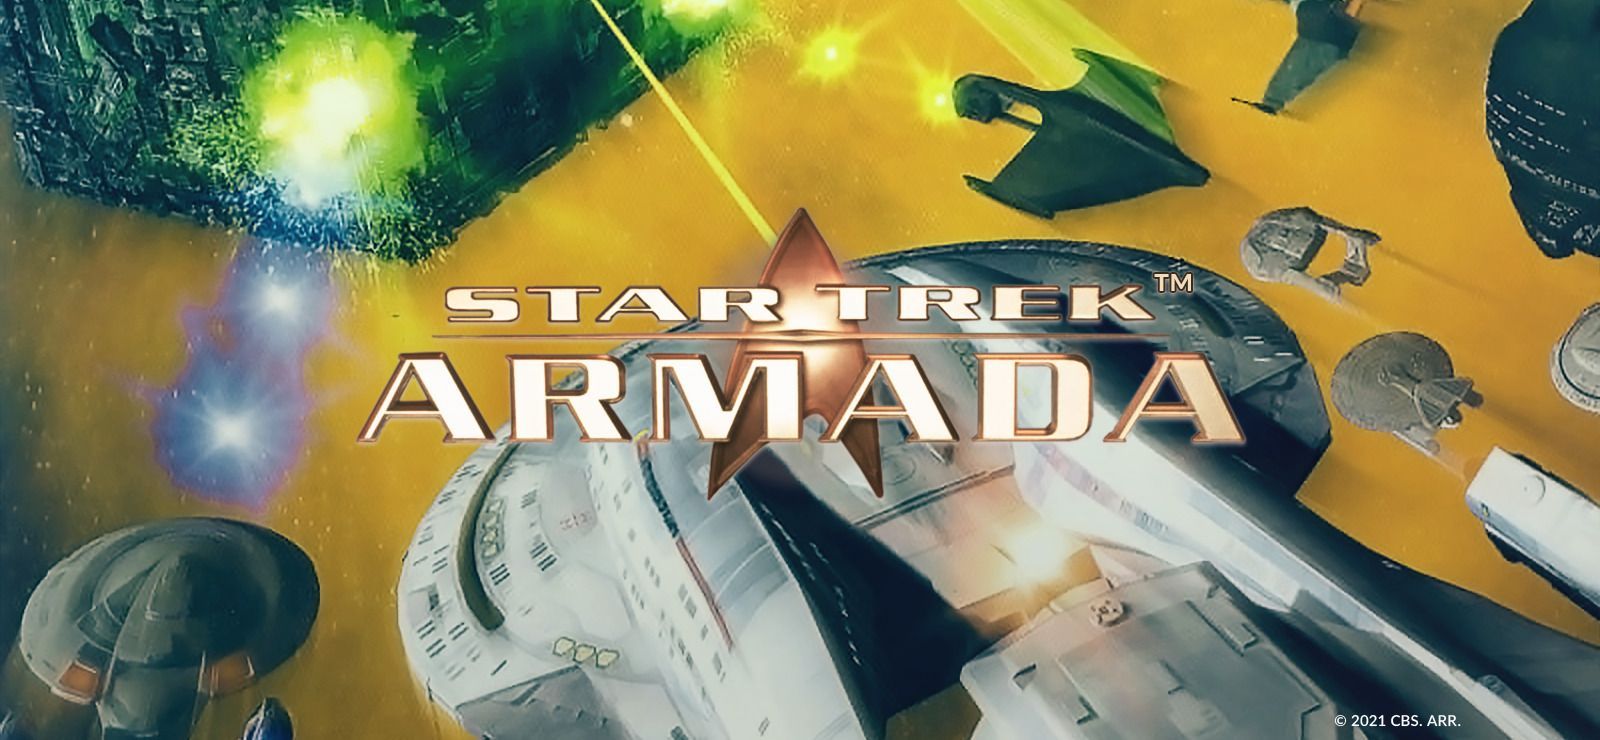 Star Trek Armada: Could a Third Game Happen?